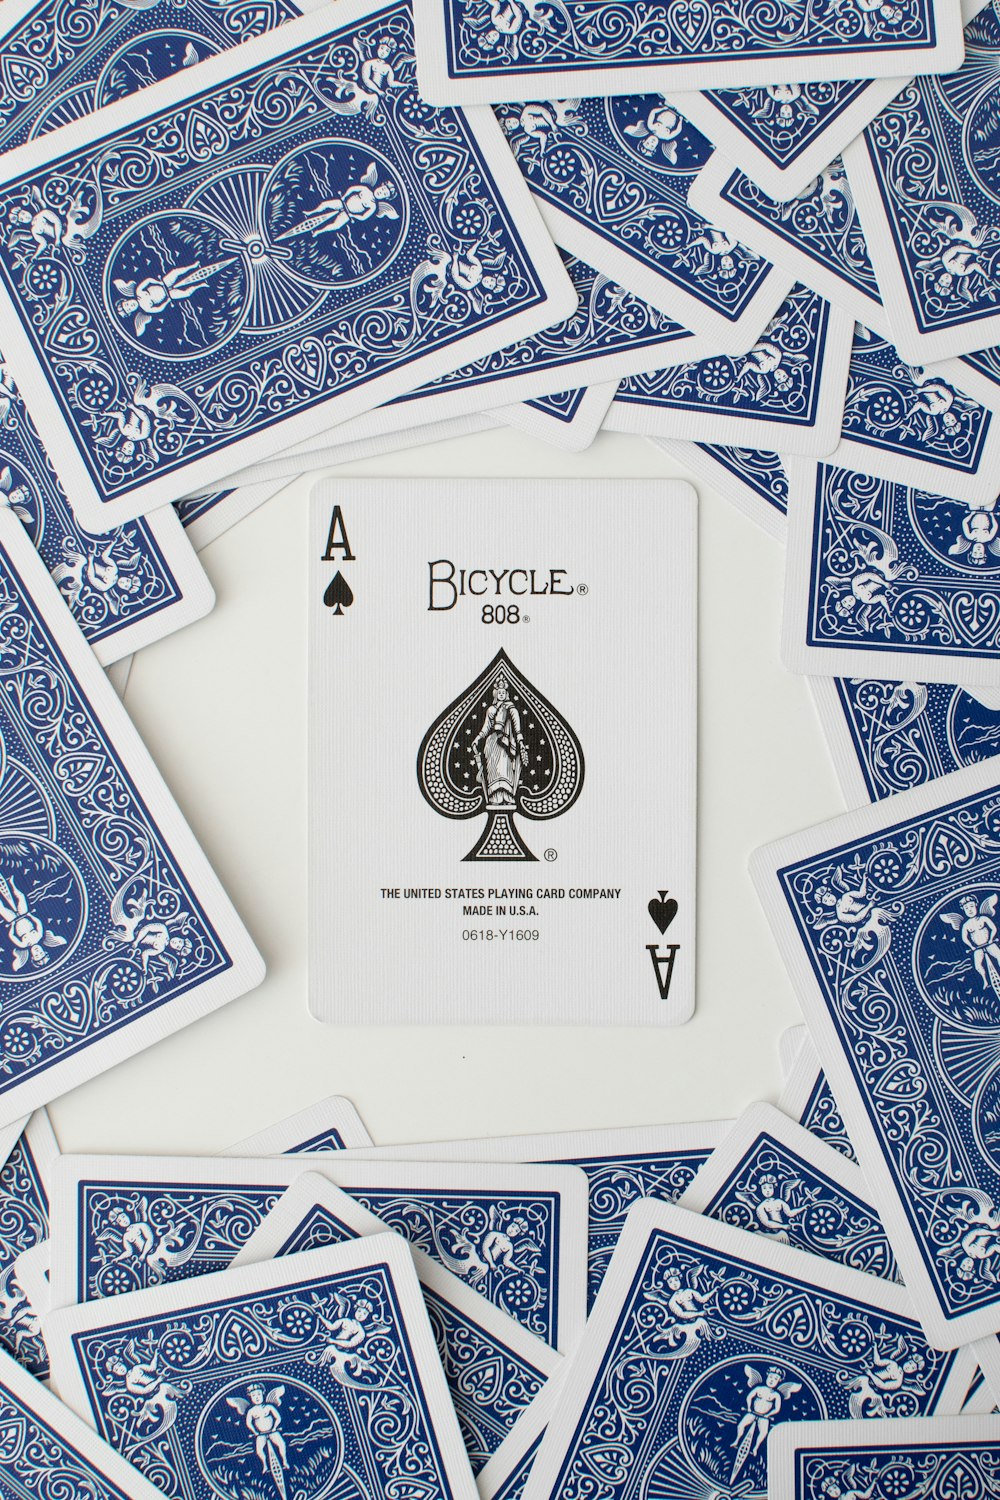 Aof spade playing card